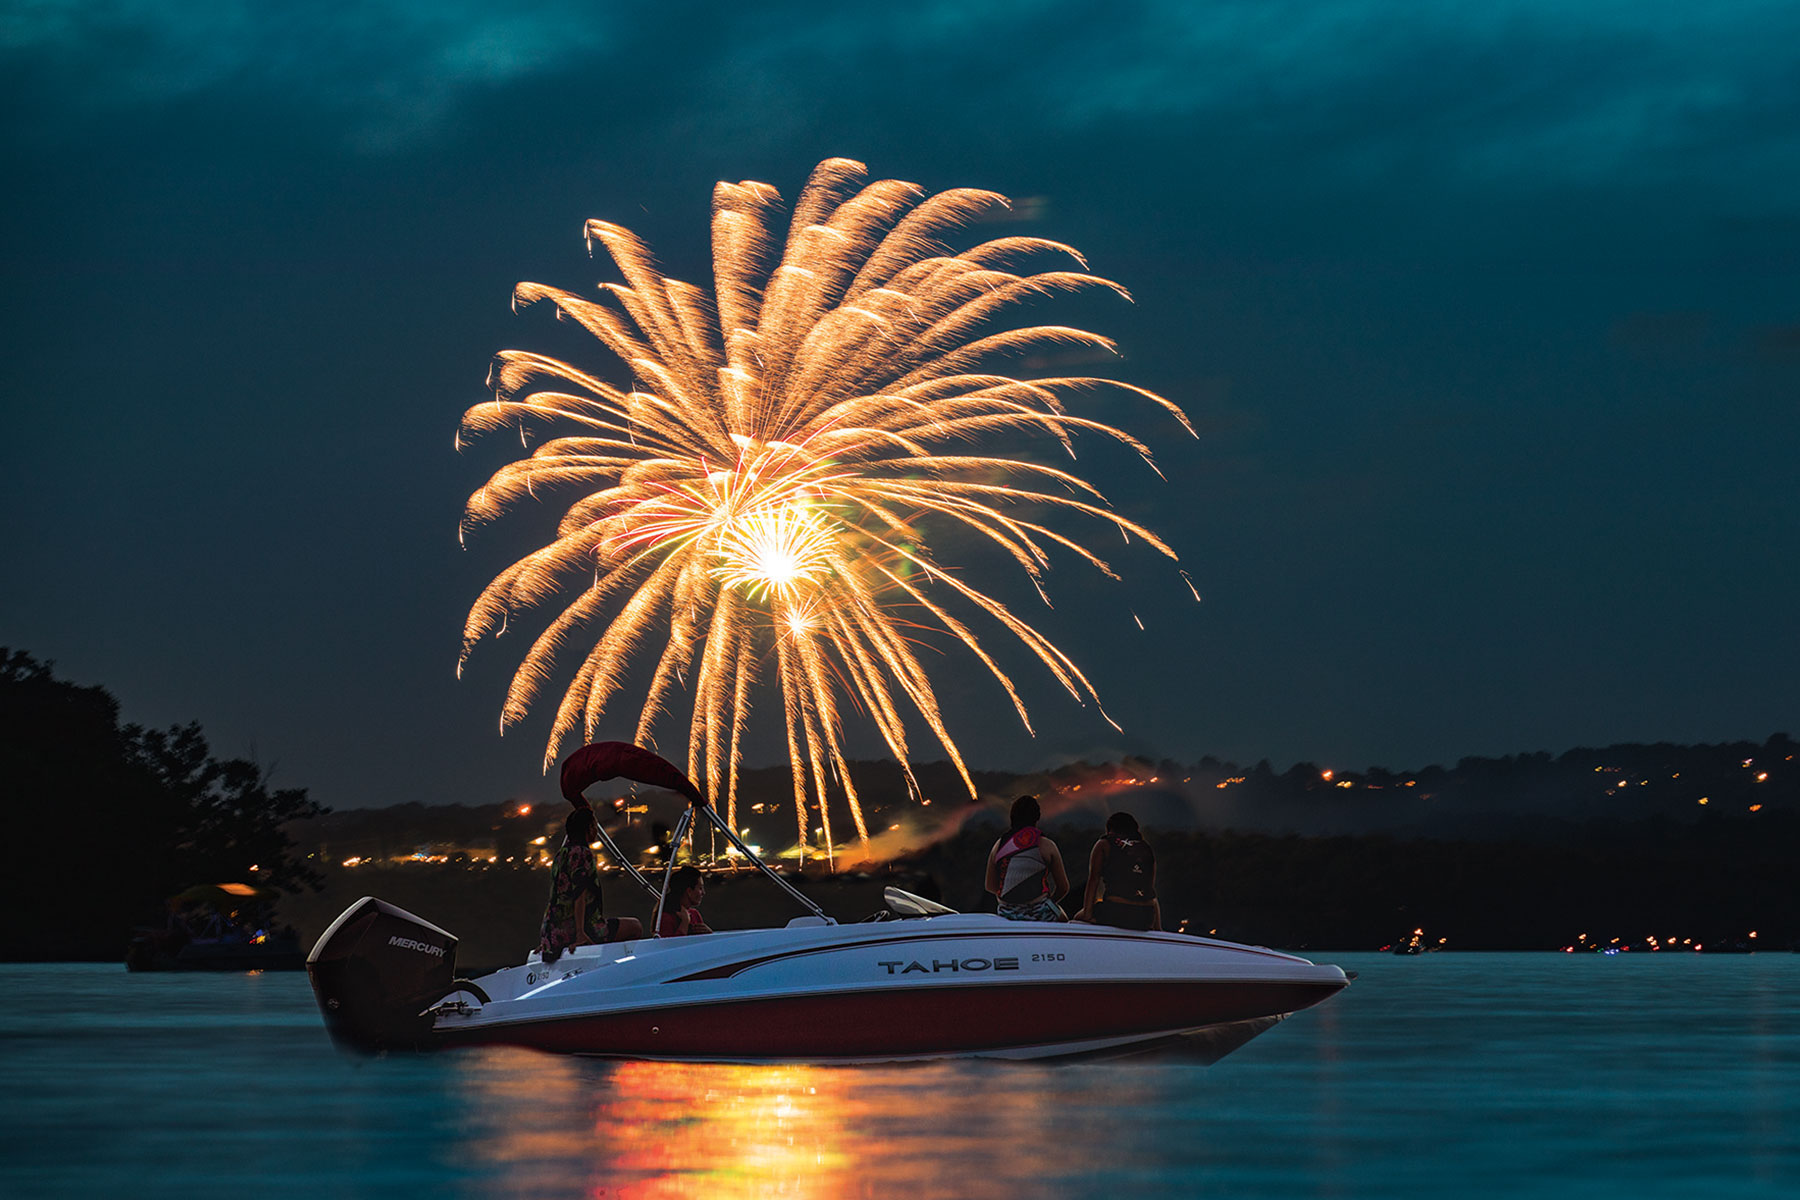 Fireworks over Tahoe Boat